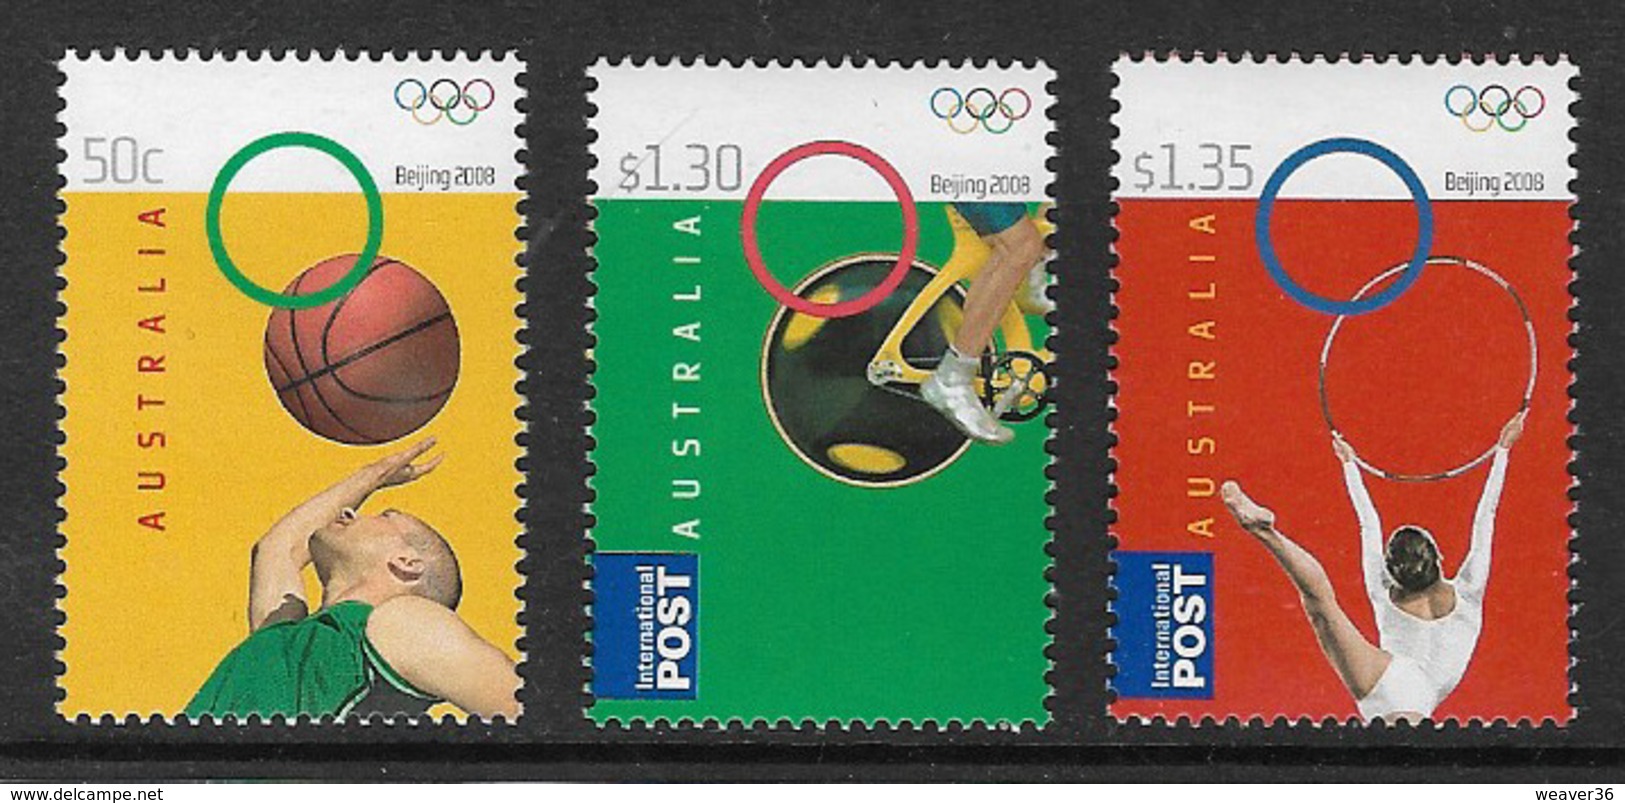 Australia SG3028-3030 2008 Beijing Olympics 3v Set Complete Unmounted Mint [3/2491/6D] - Mint Stamps